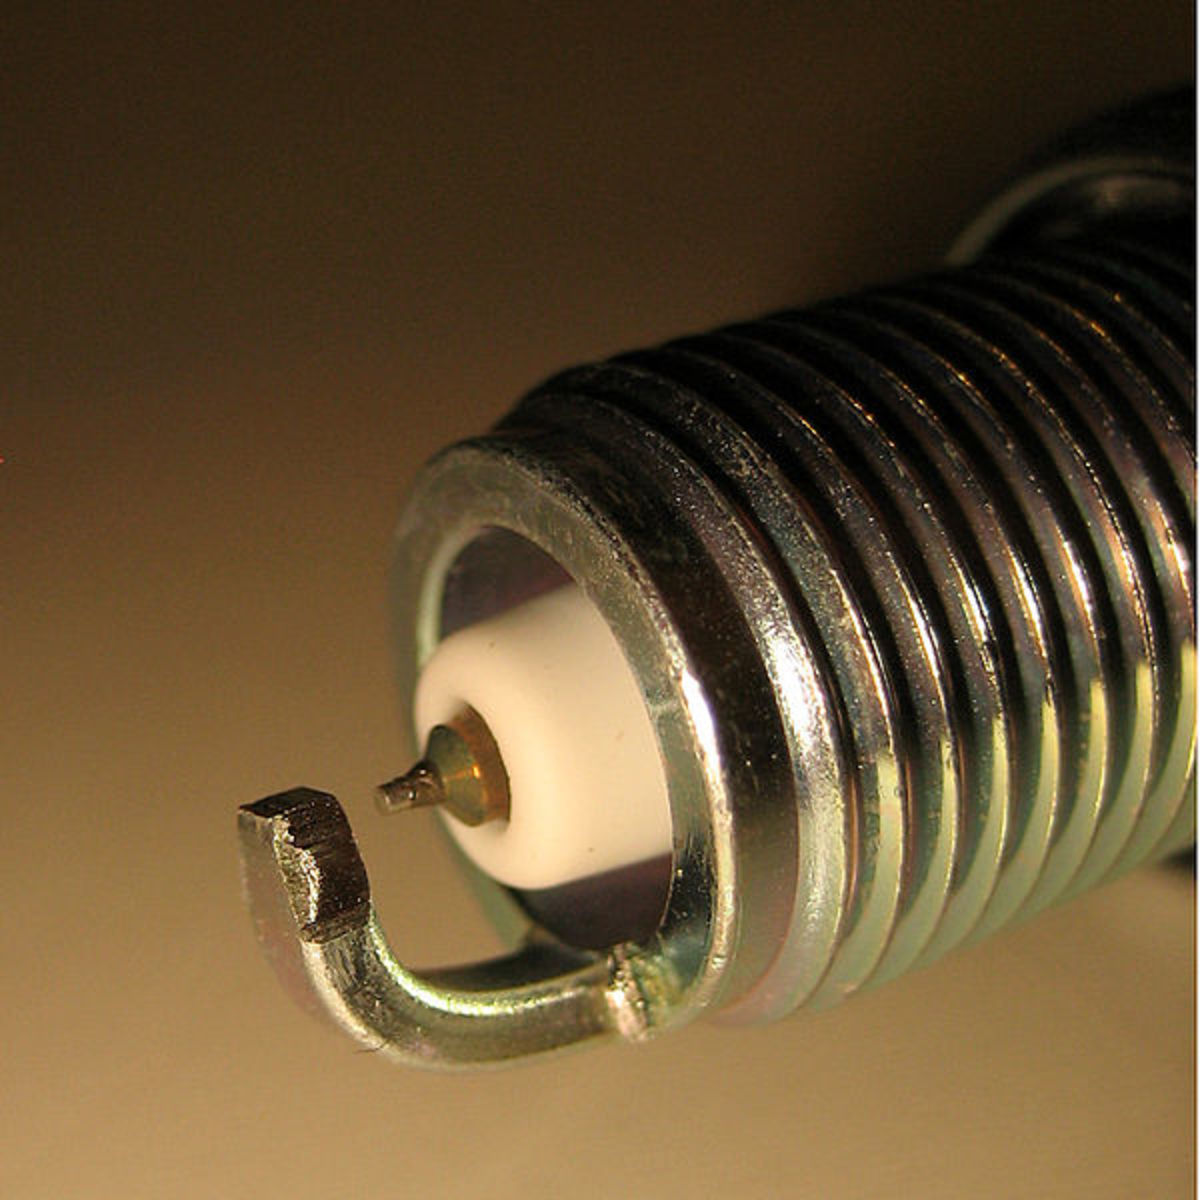 Iridium spark plugs offer the longest service life of the three popular types of spark plugs.